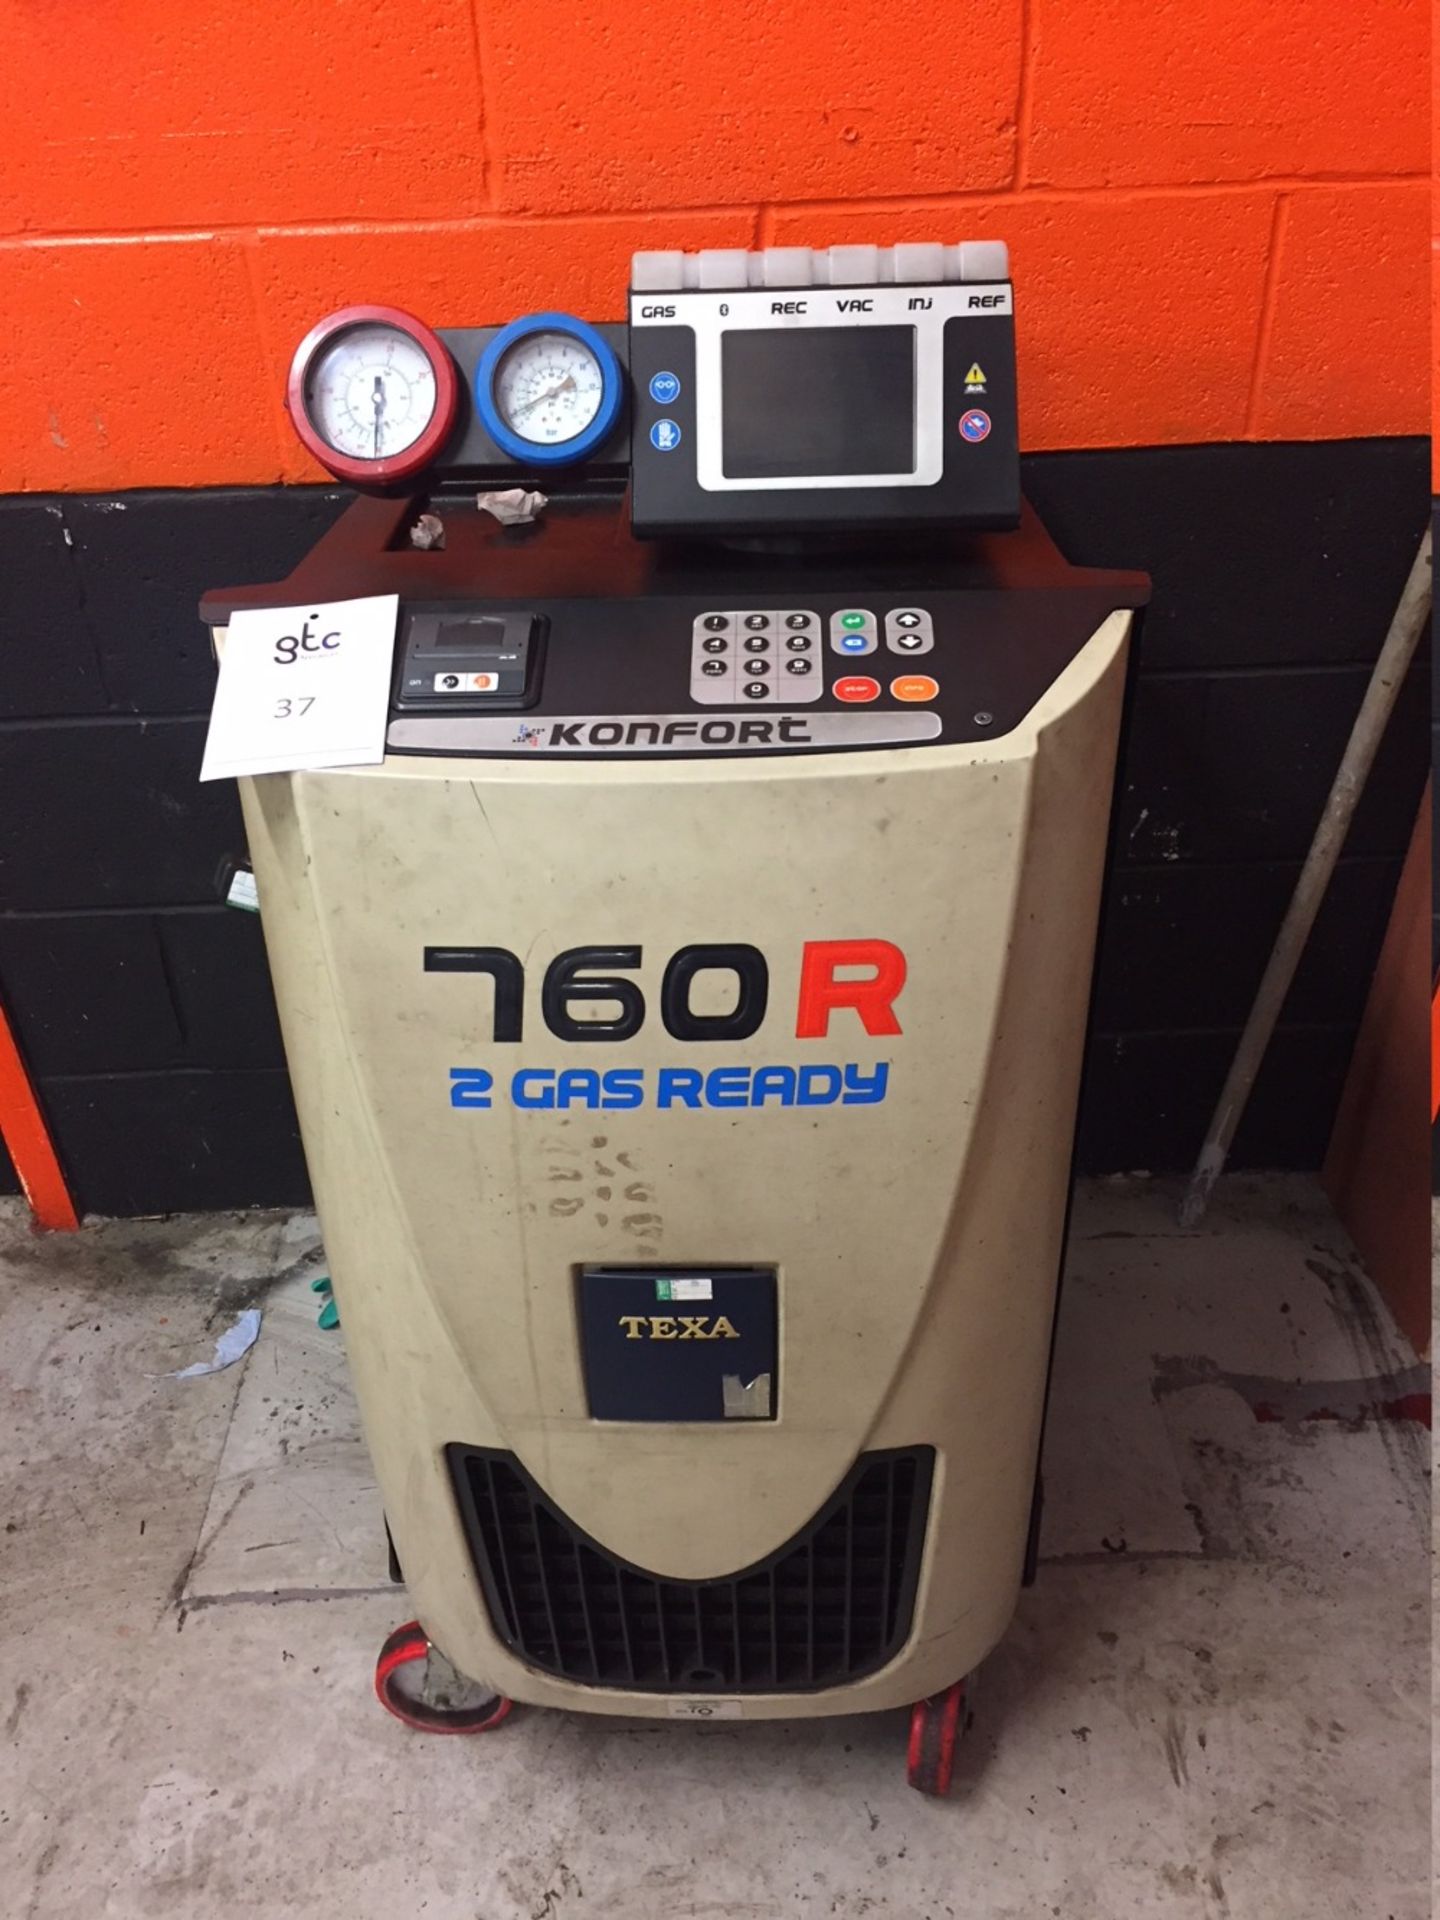 Konfort Texa 760R 2 Gas Ready Air Conditioning Recharging System